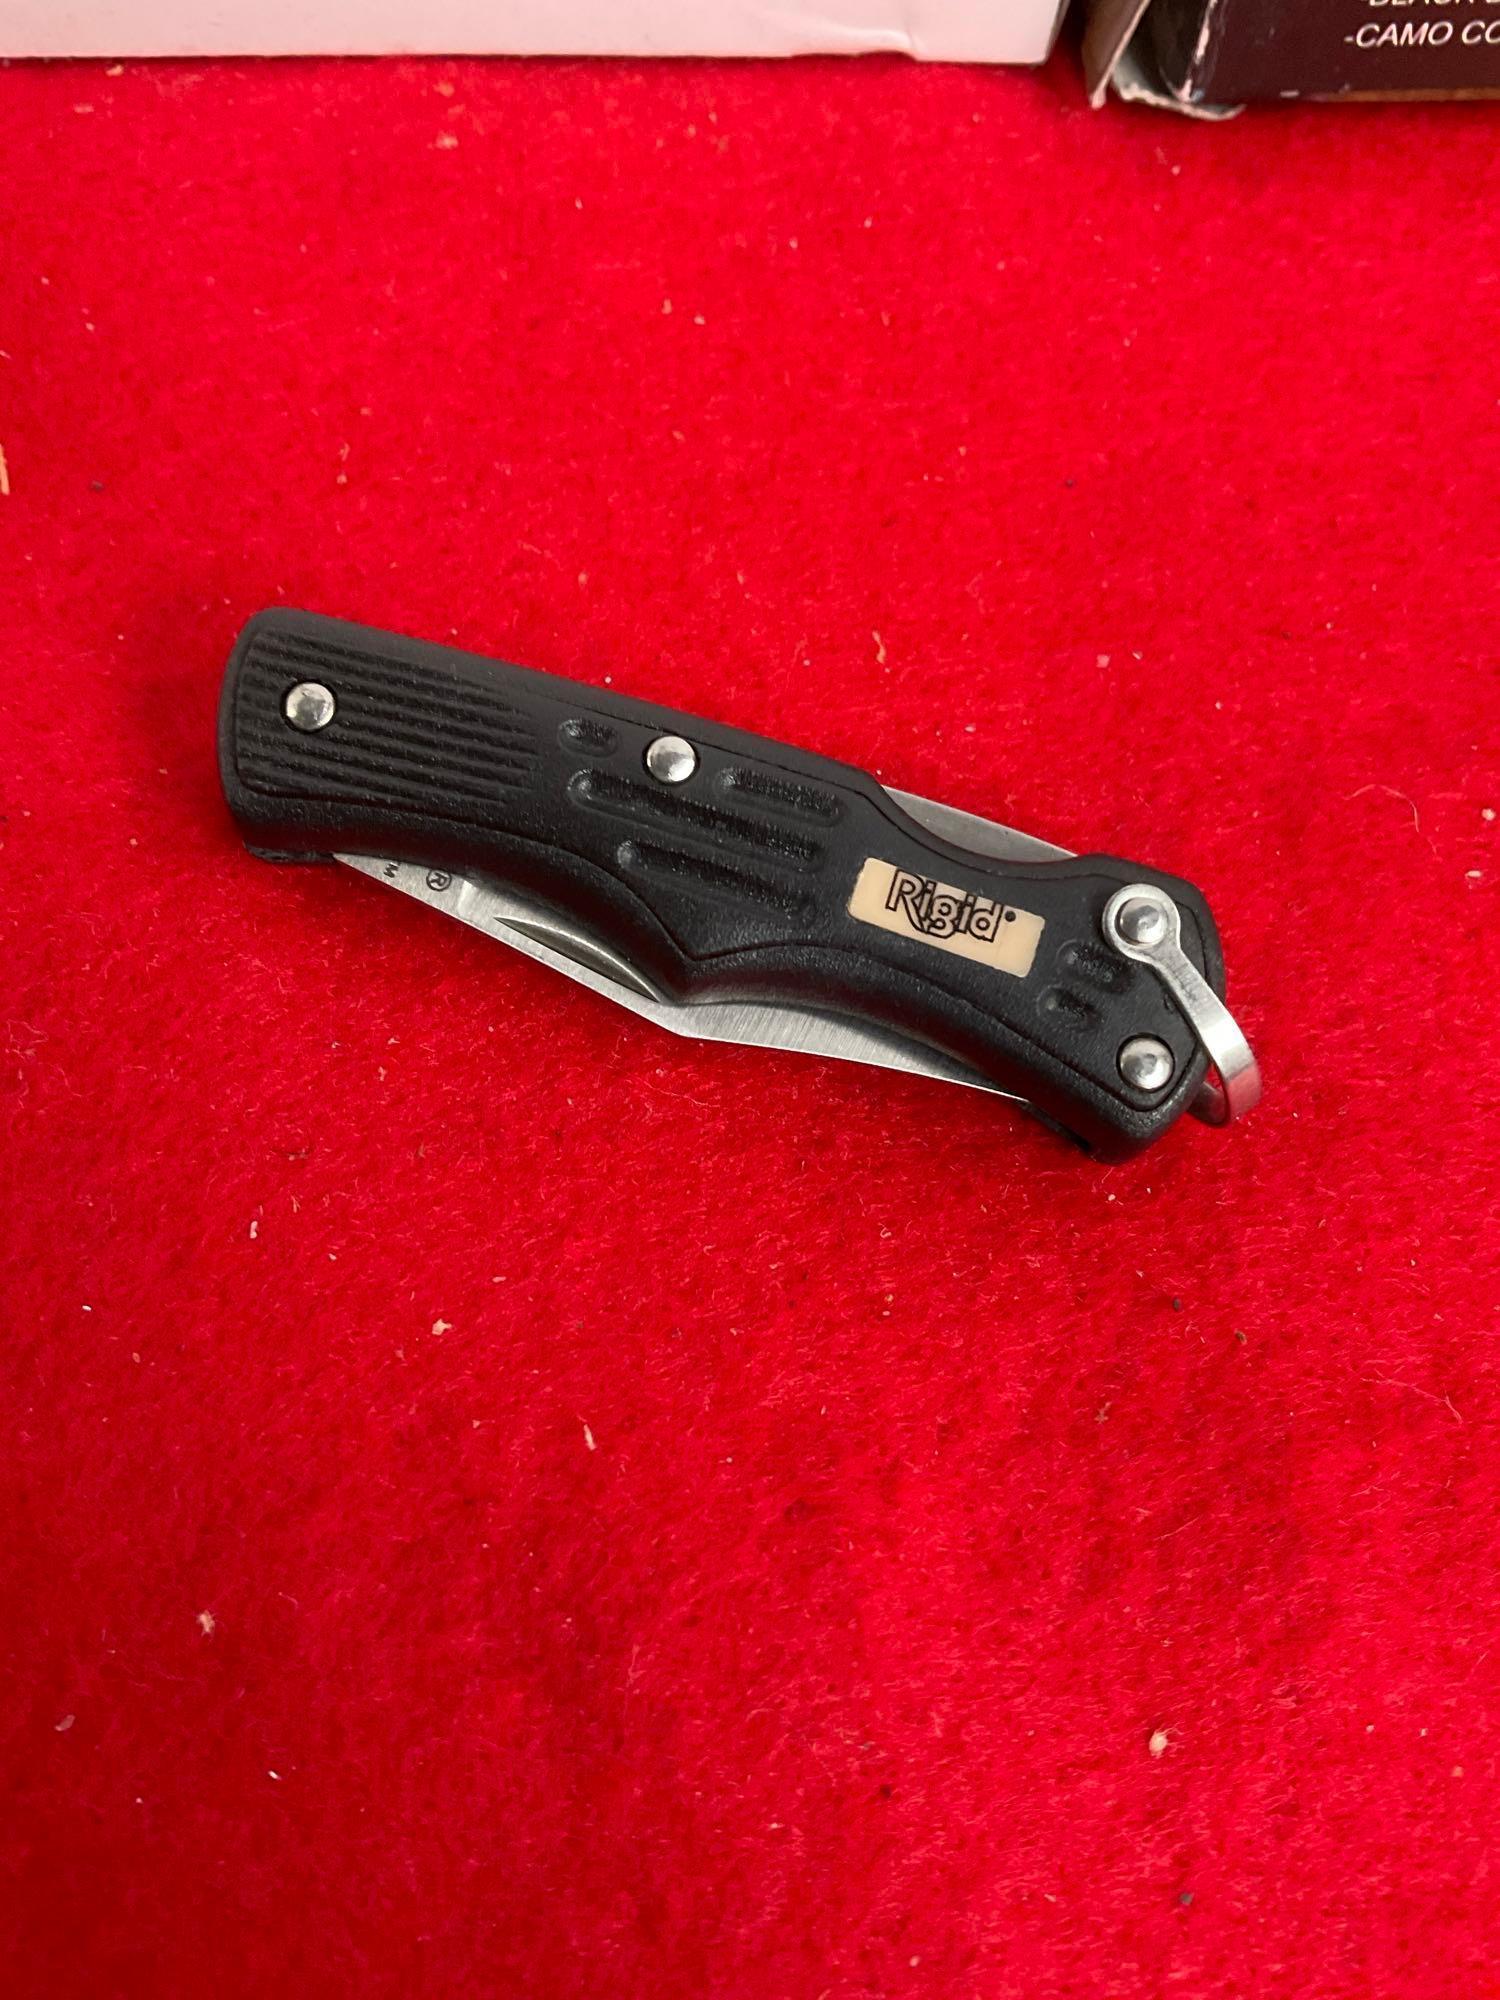 3x Rigid Tough Gear Folding Pocket Knives & Forest Hunter Camo Folding Knife w/ Black Blade